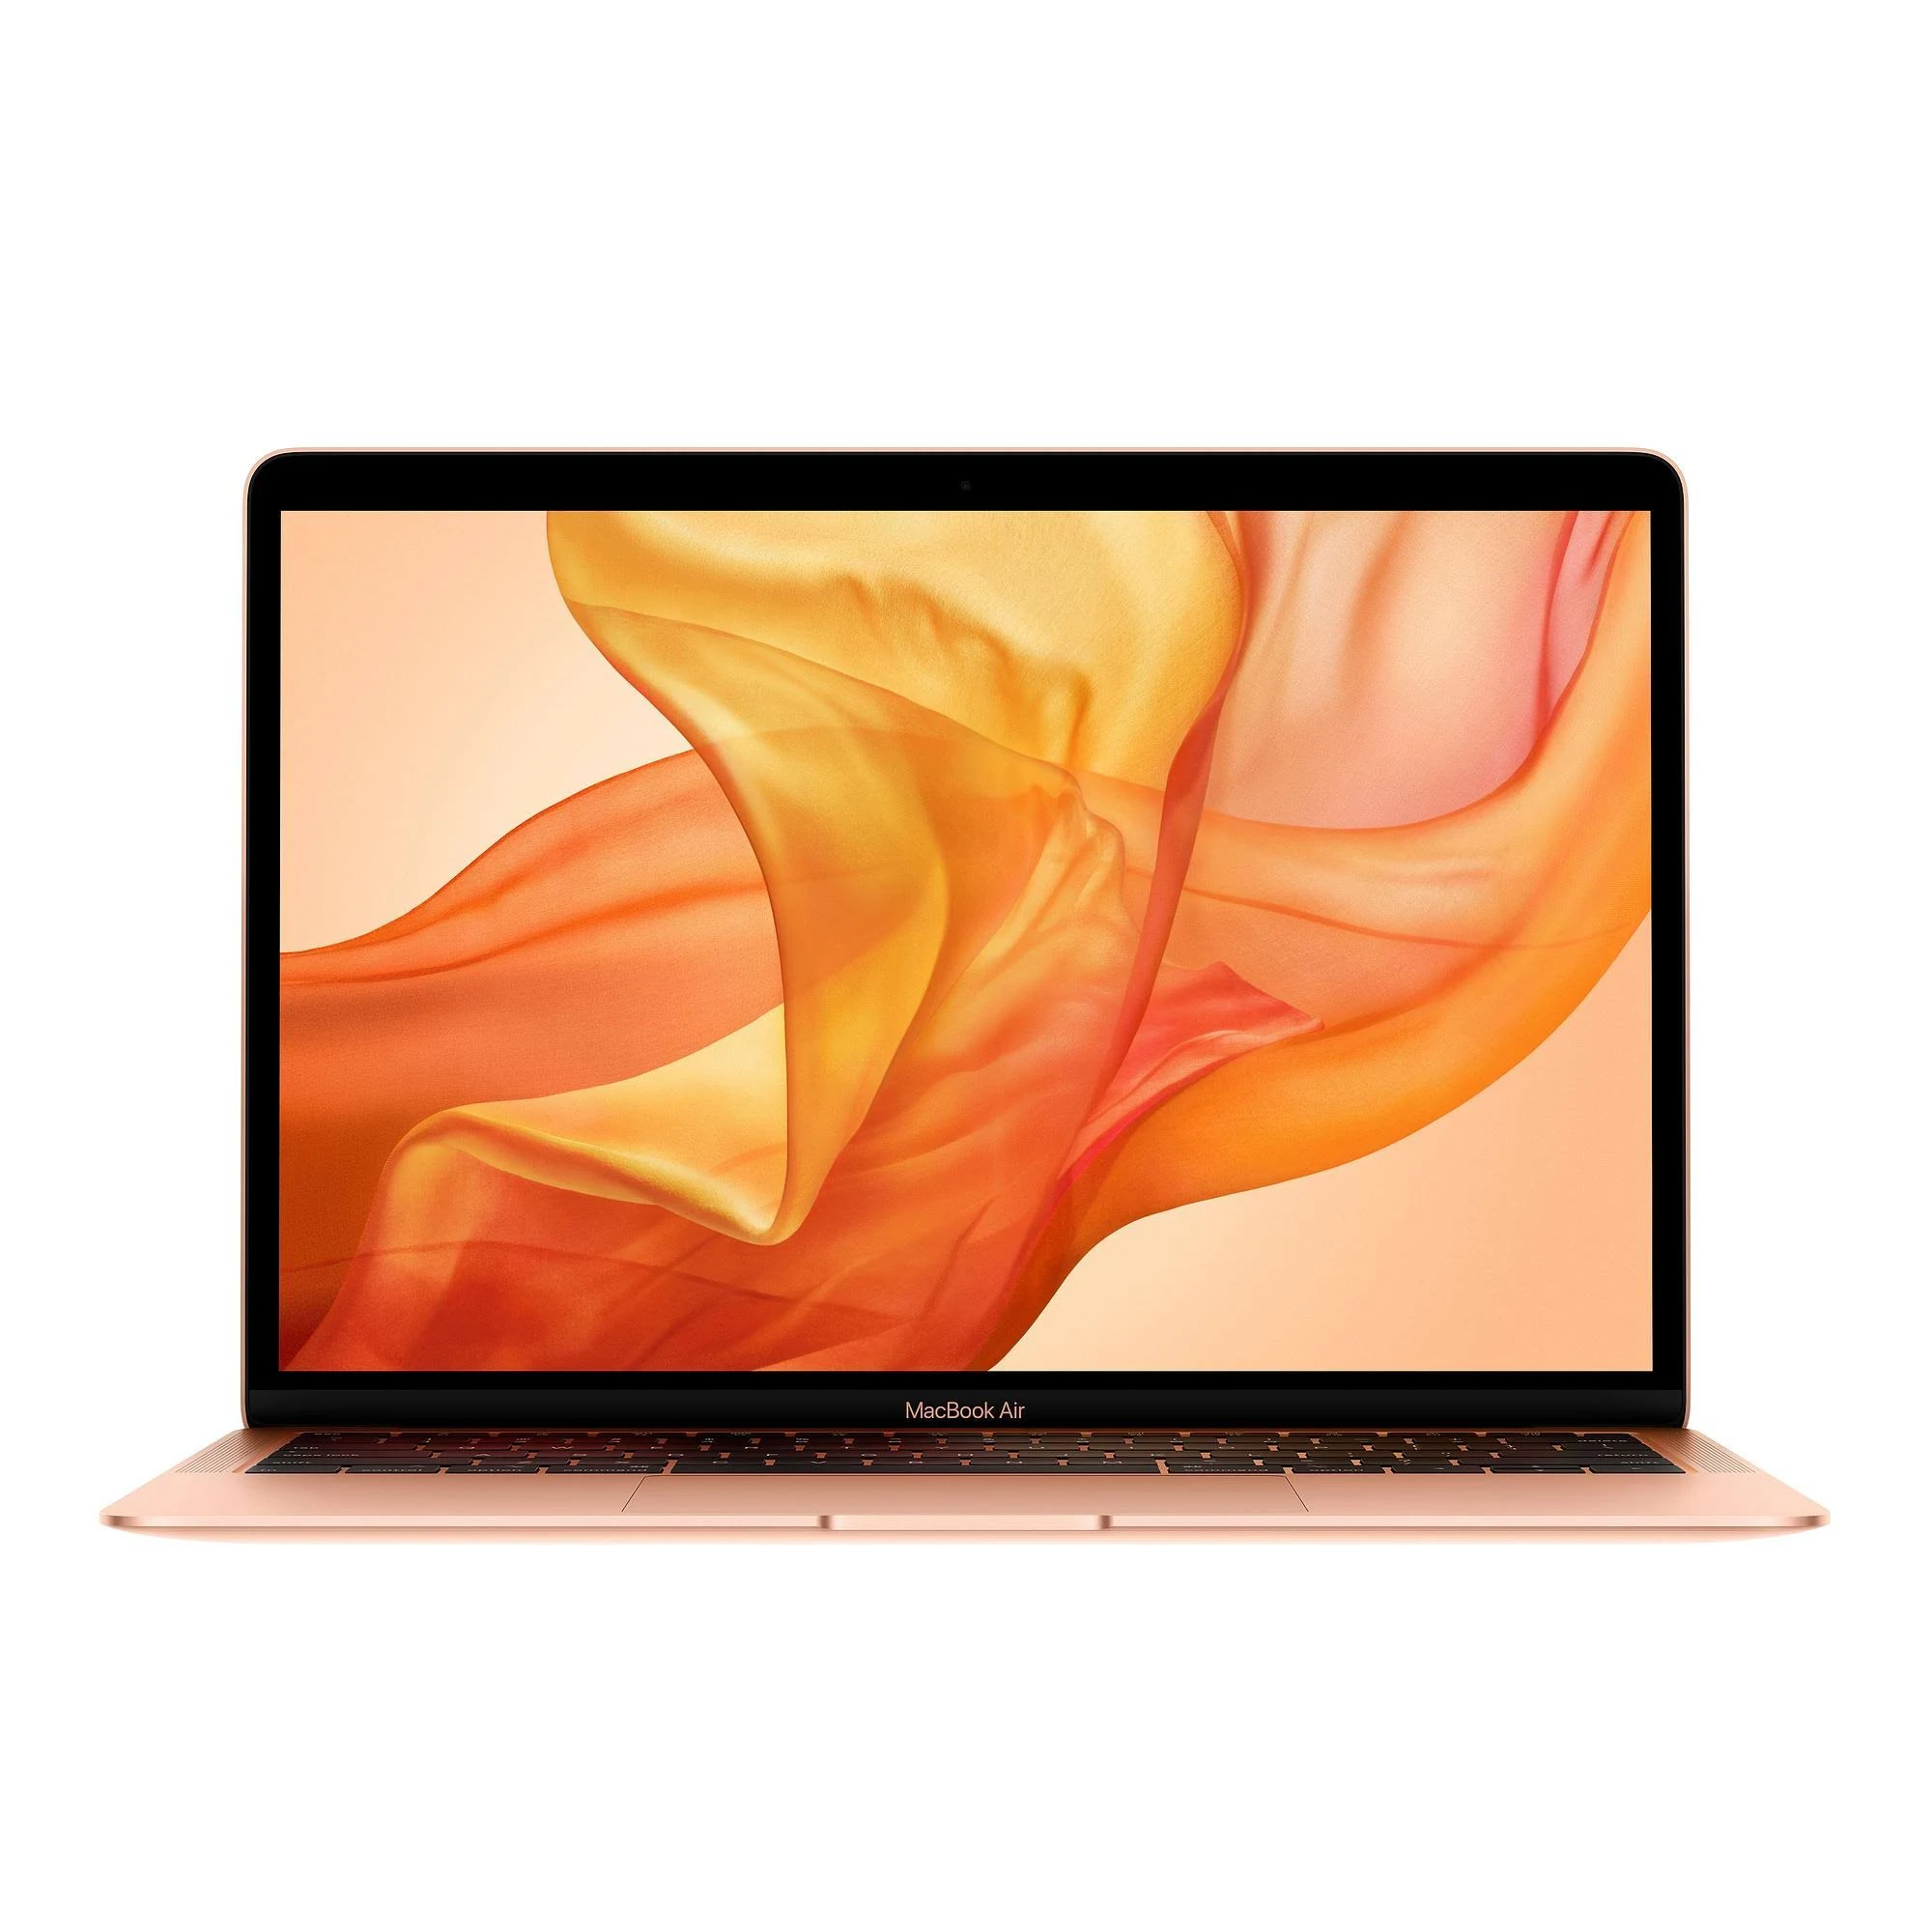 MacBook Air 13 inch True Tone 2019 i5 1.6GHz - 256GB SSD - 8GB Ram 256GB Gold Very Good